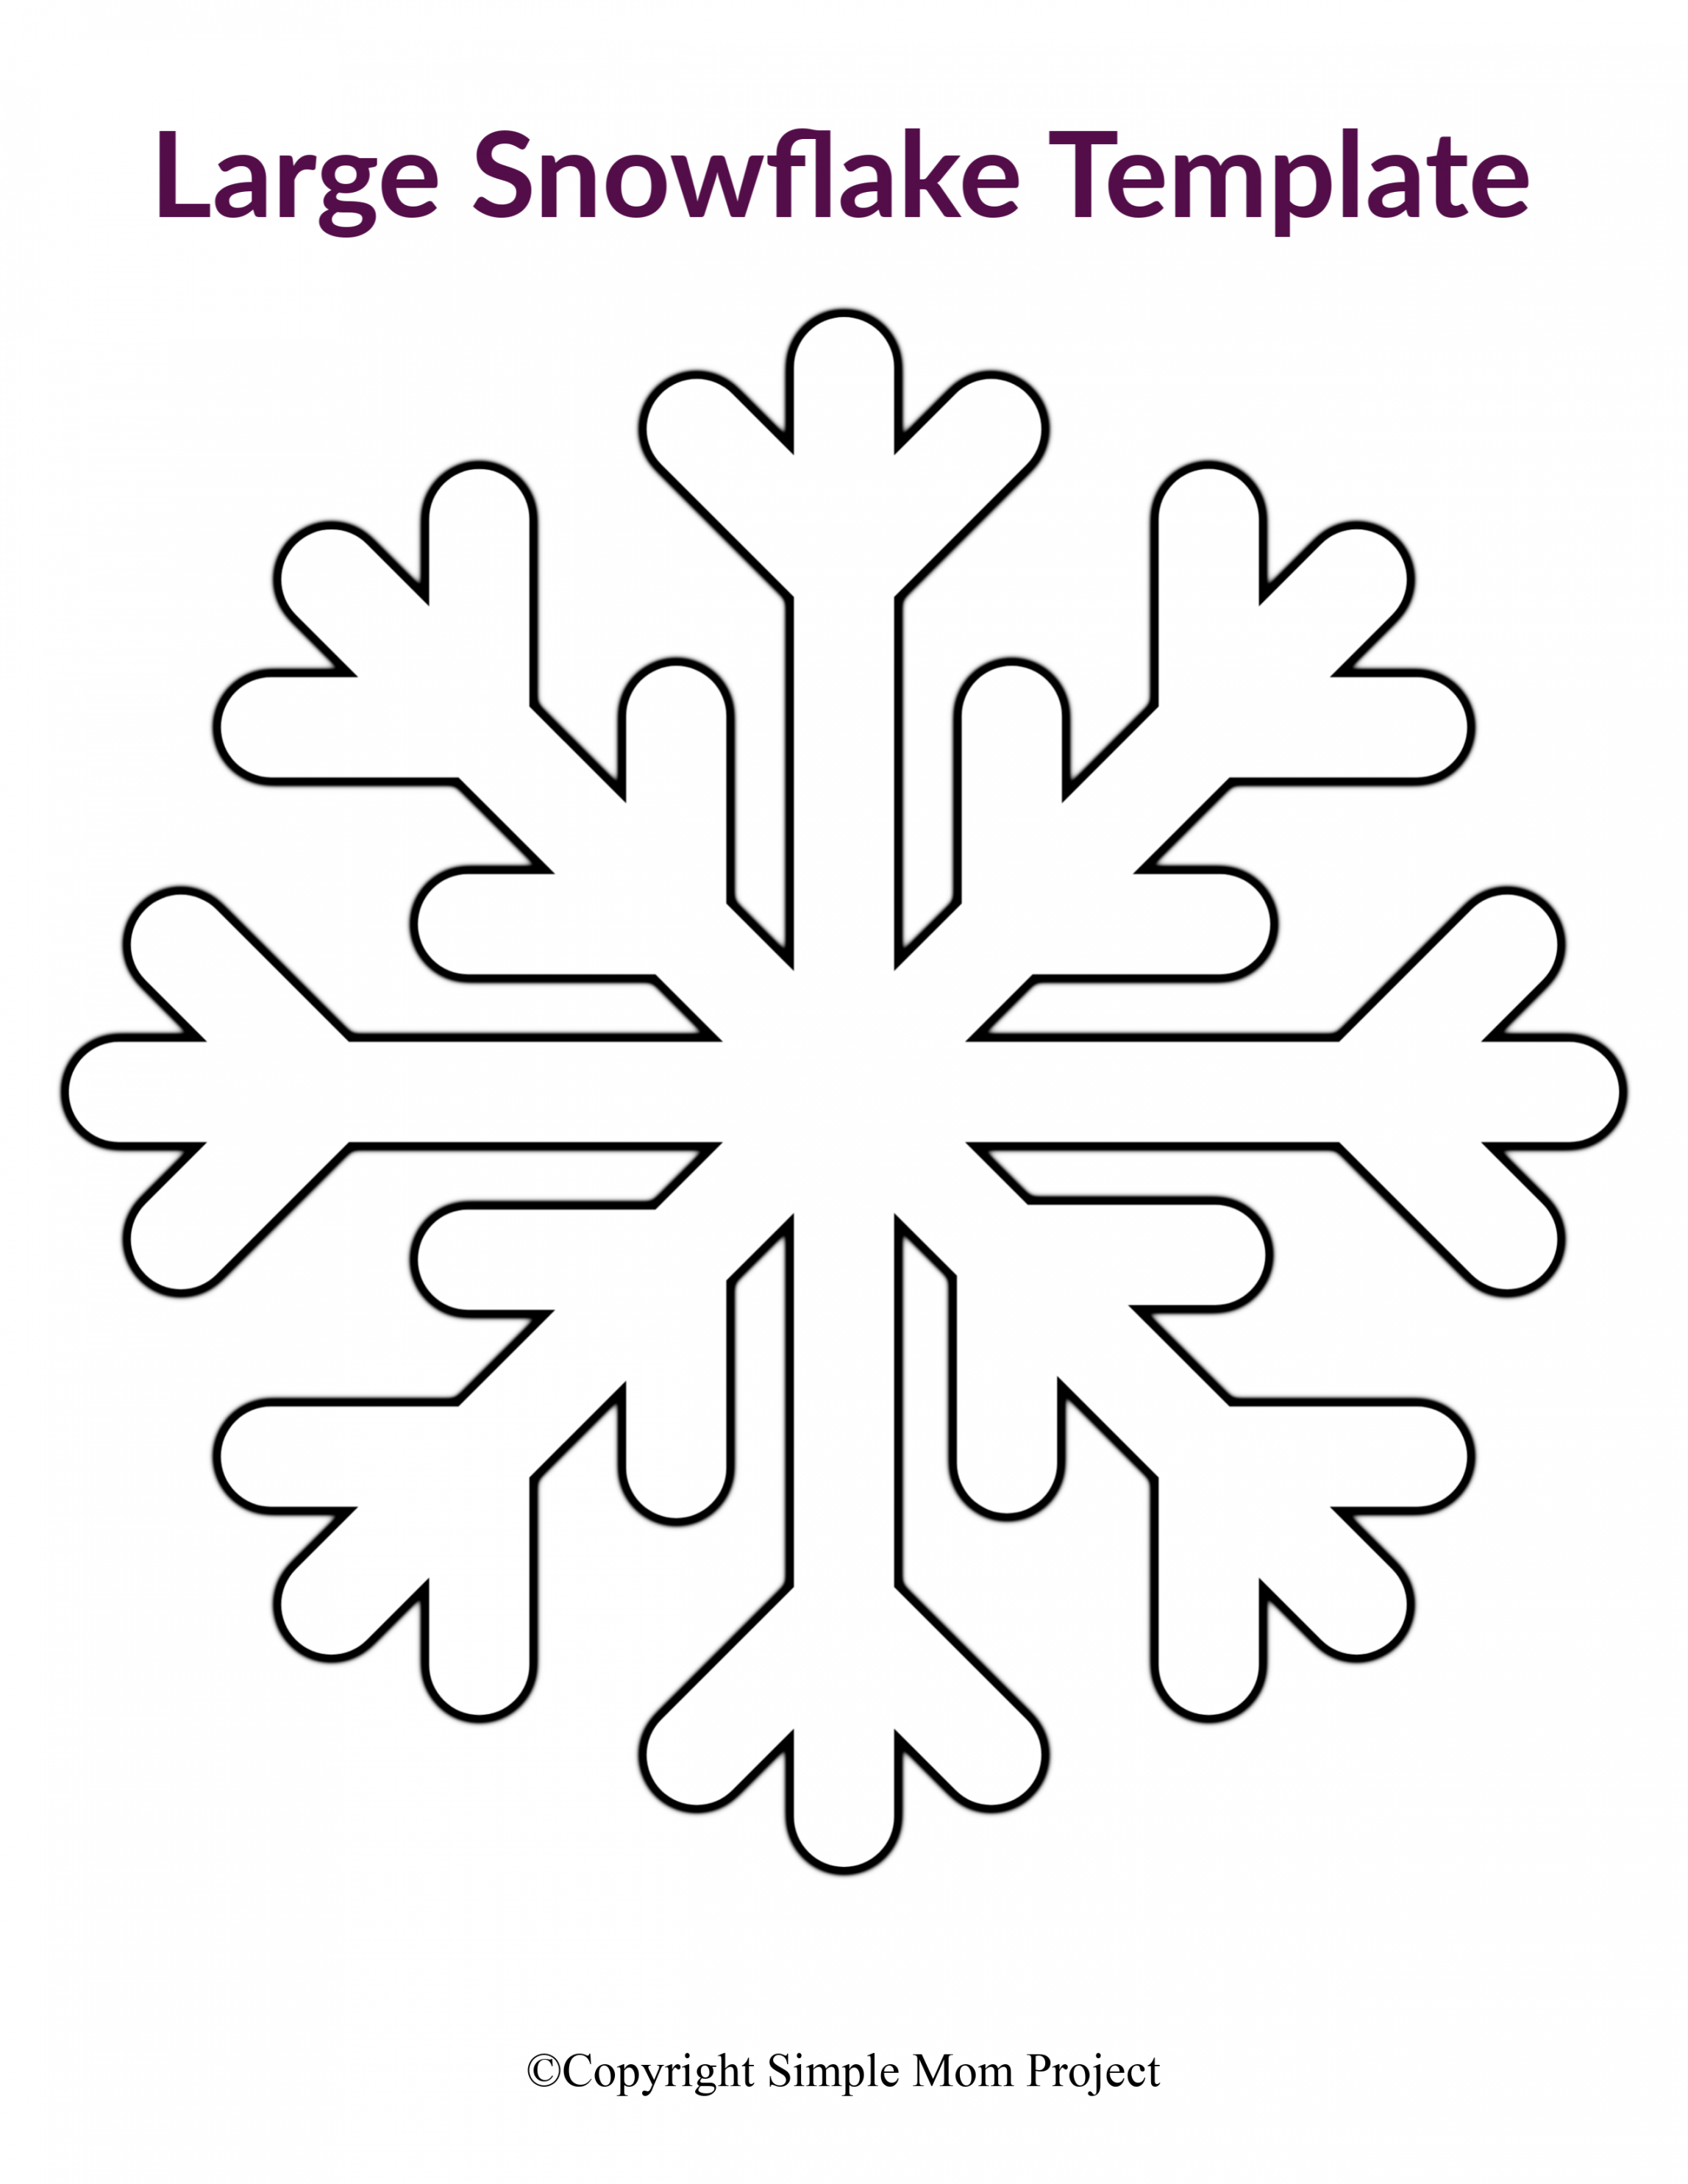 Free Printable Large Snowflake Templates - Simple Mom Project - FREE Printables - Snowflakes Template